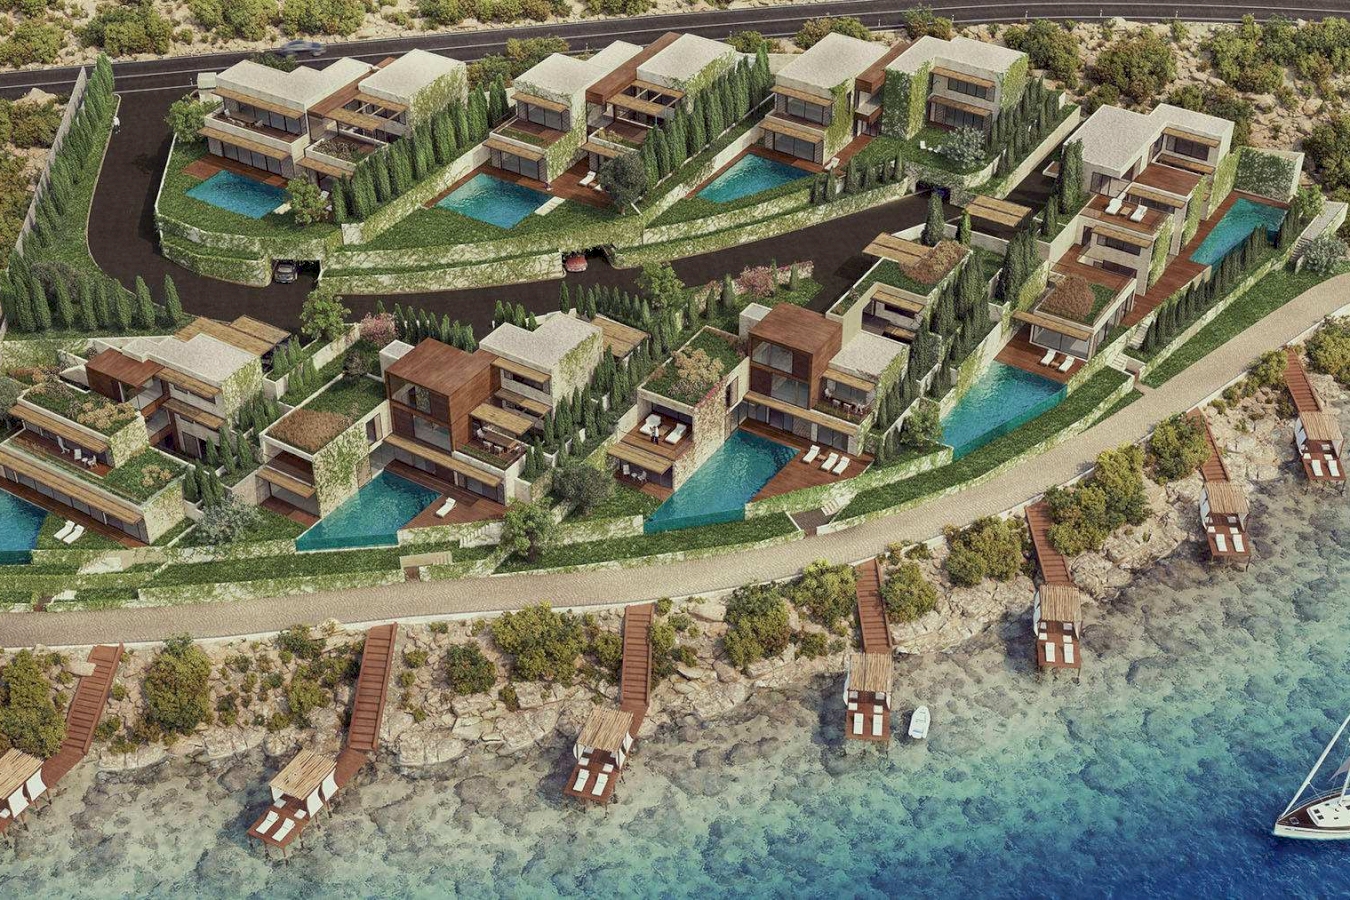 Luksuzan resort sa sedam vila uz more - Dalmacija